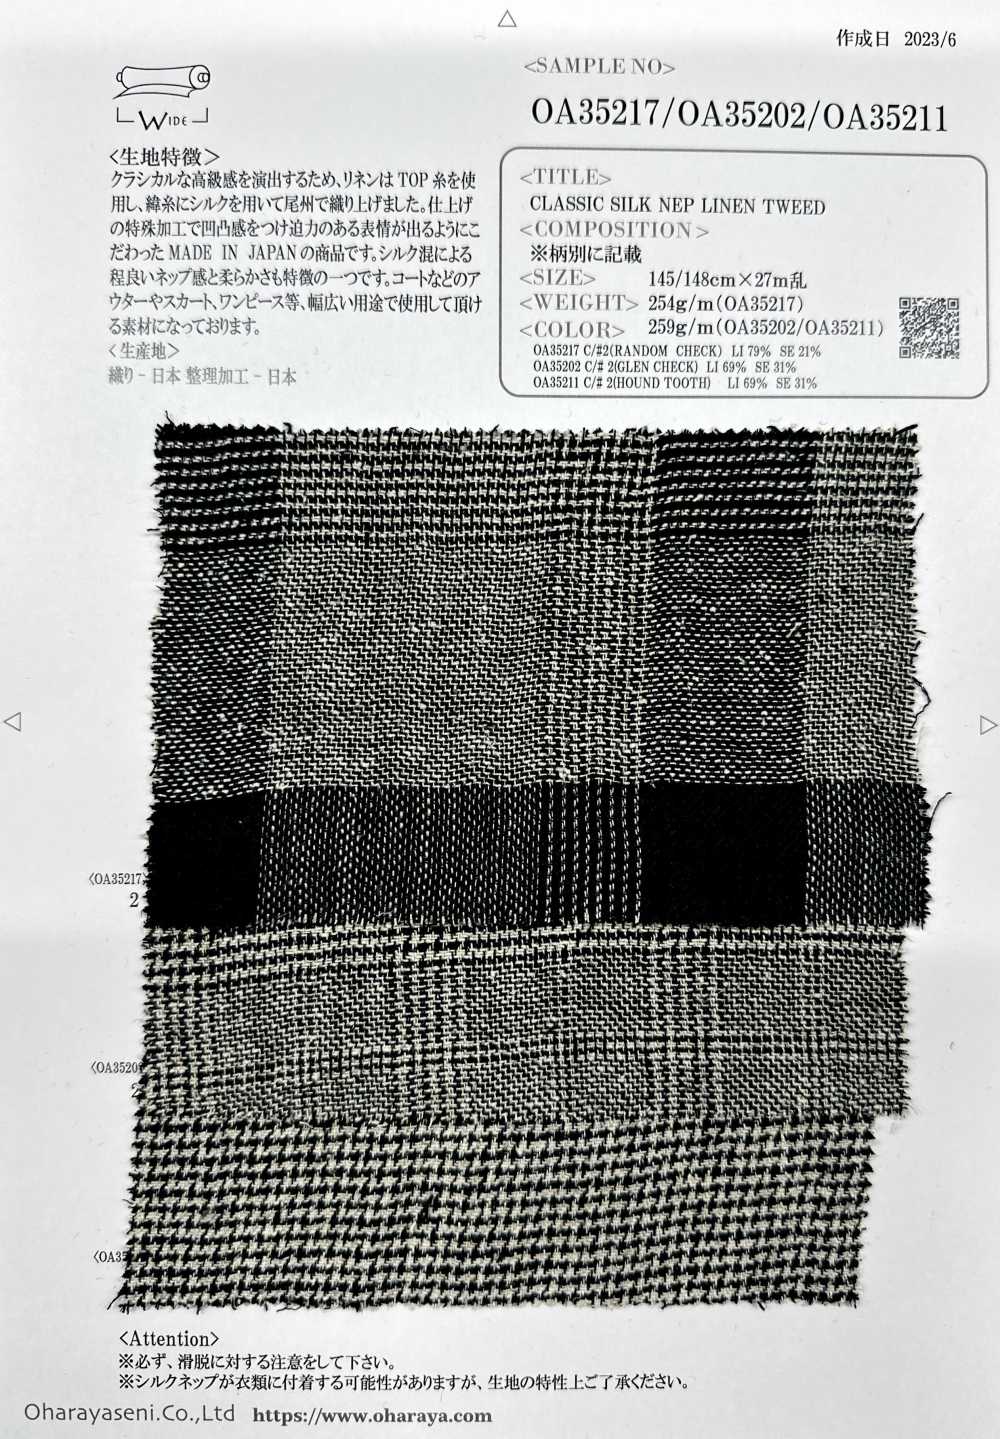 OA35211 LINHO CLÁSSICO NEP LINHO TWEED[Têxtil / Tecido] Oharayaseni